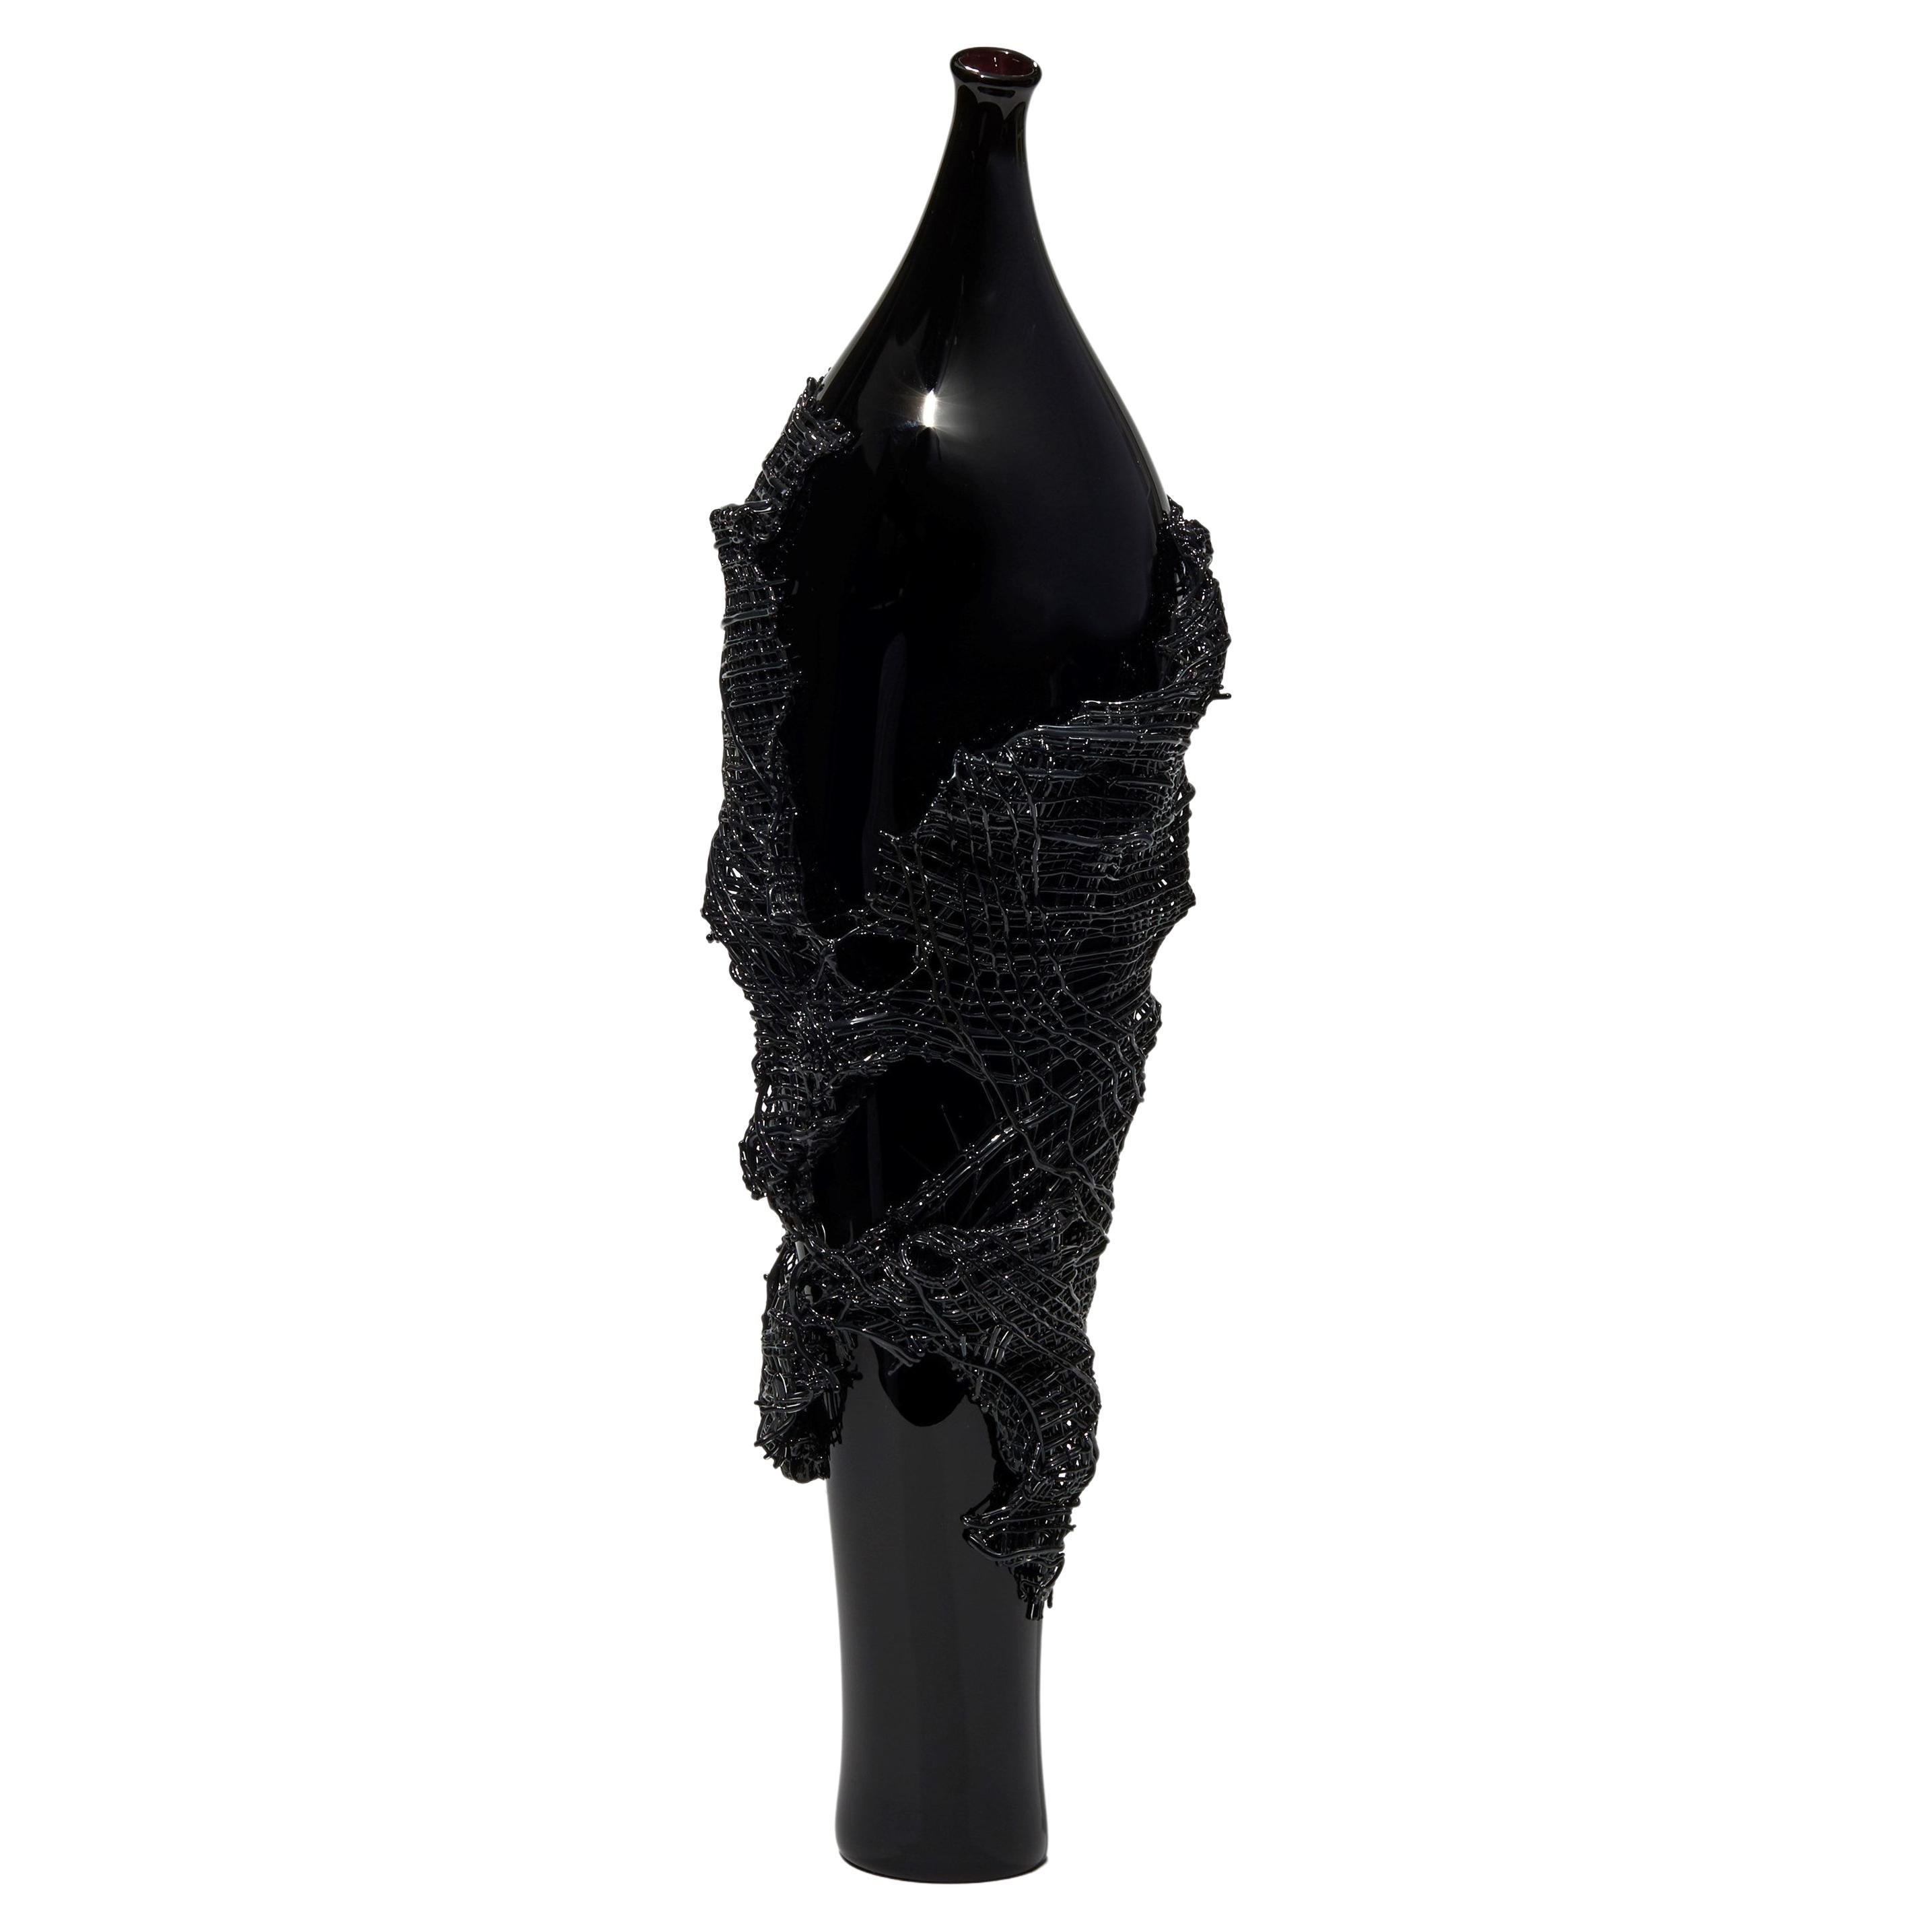 Odysseus, a unique black hand-blown glass sculpture by Cathryn Shilling For Sale